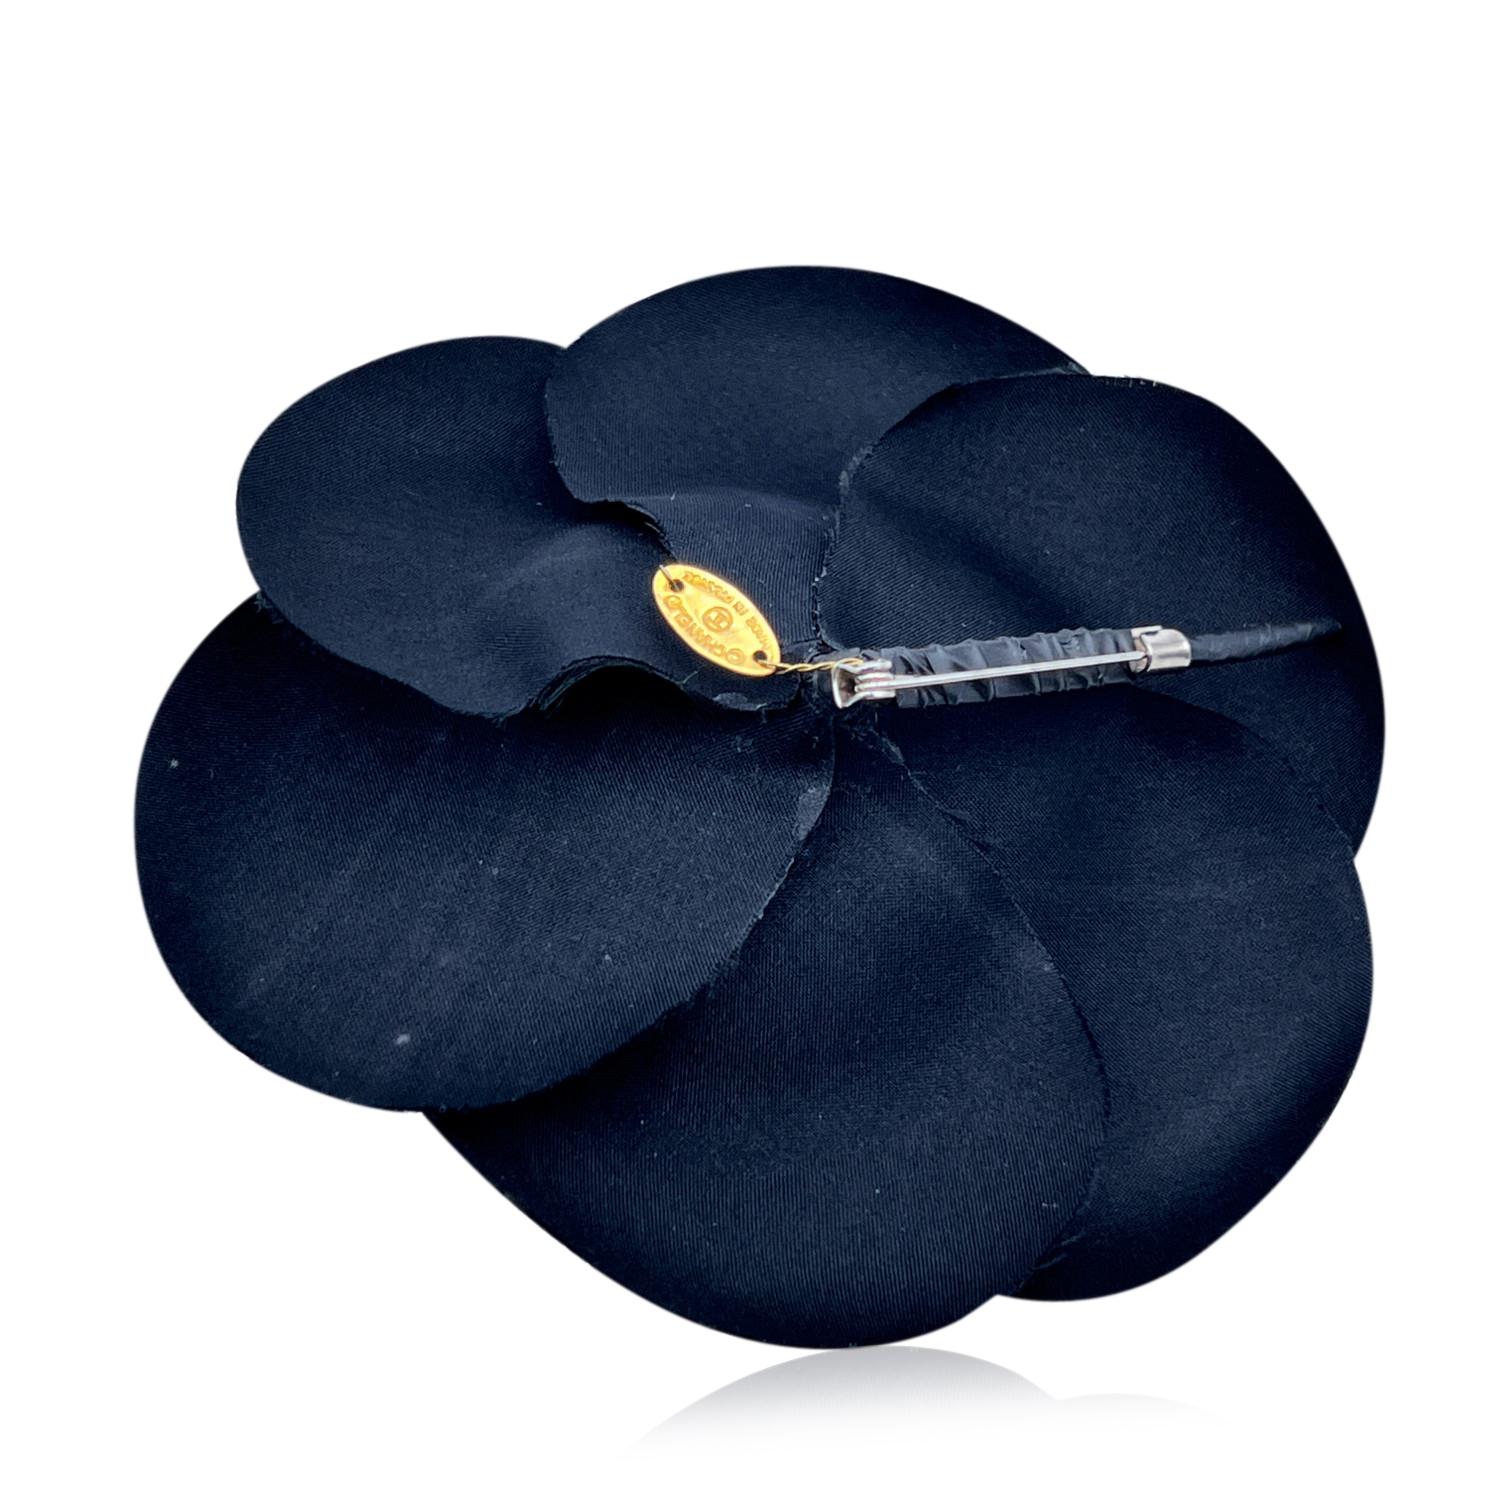 chanel flower pin brooch